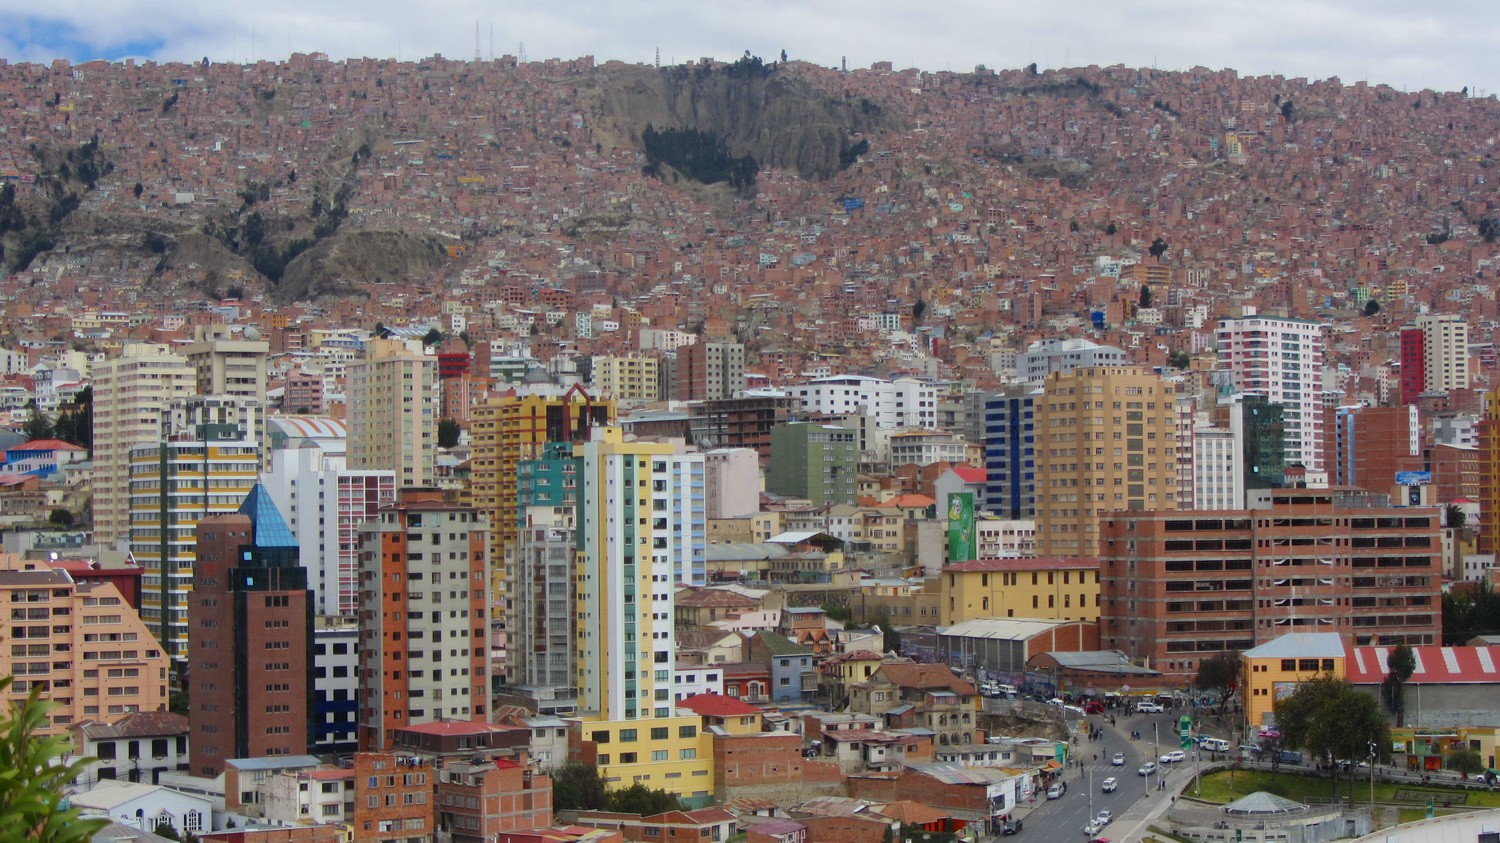 La Paz seen from the viewpoint Mirador Laikakota